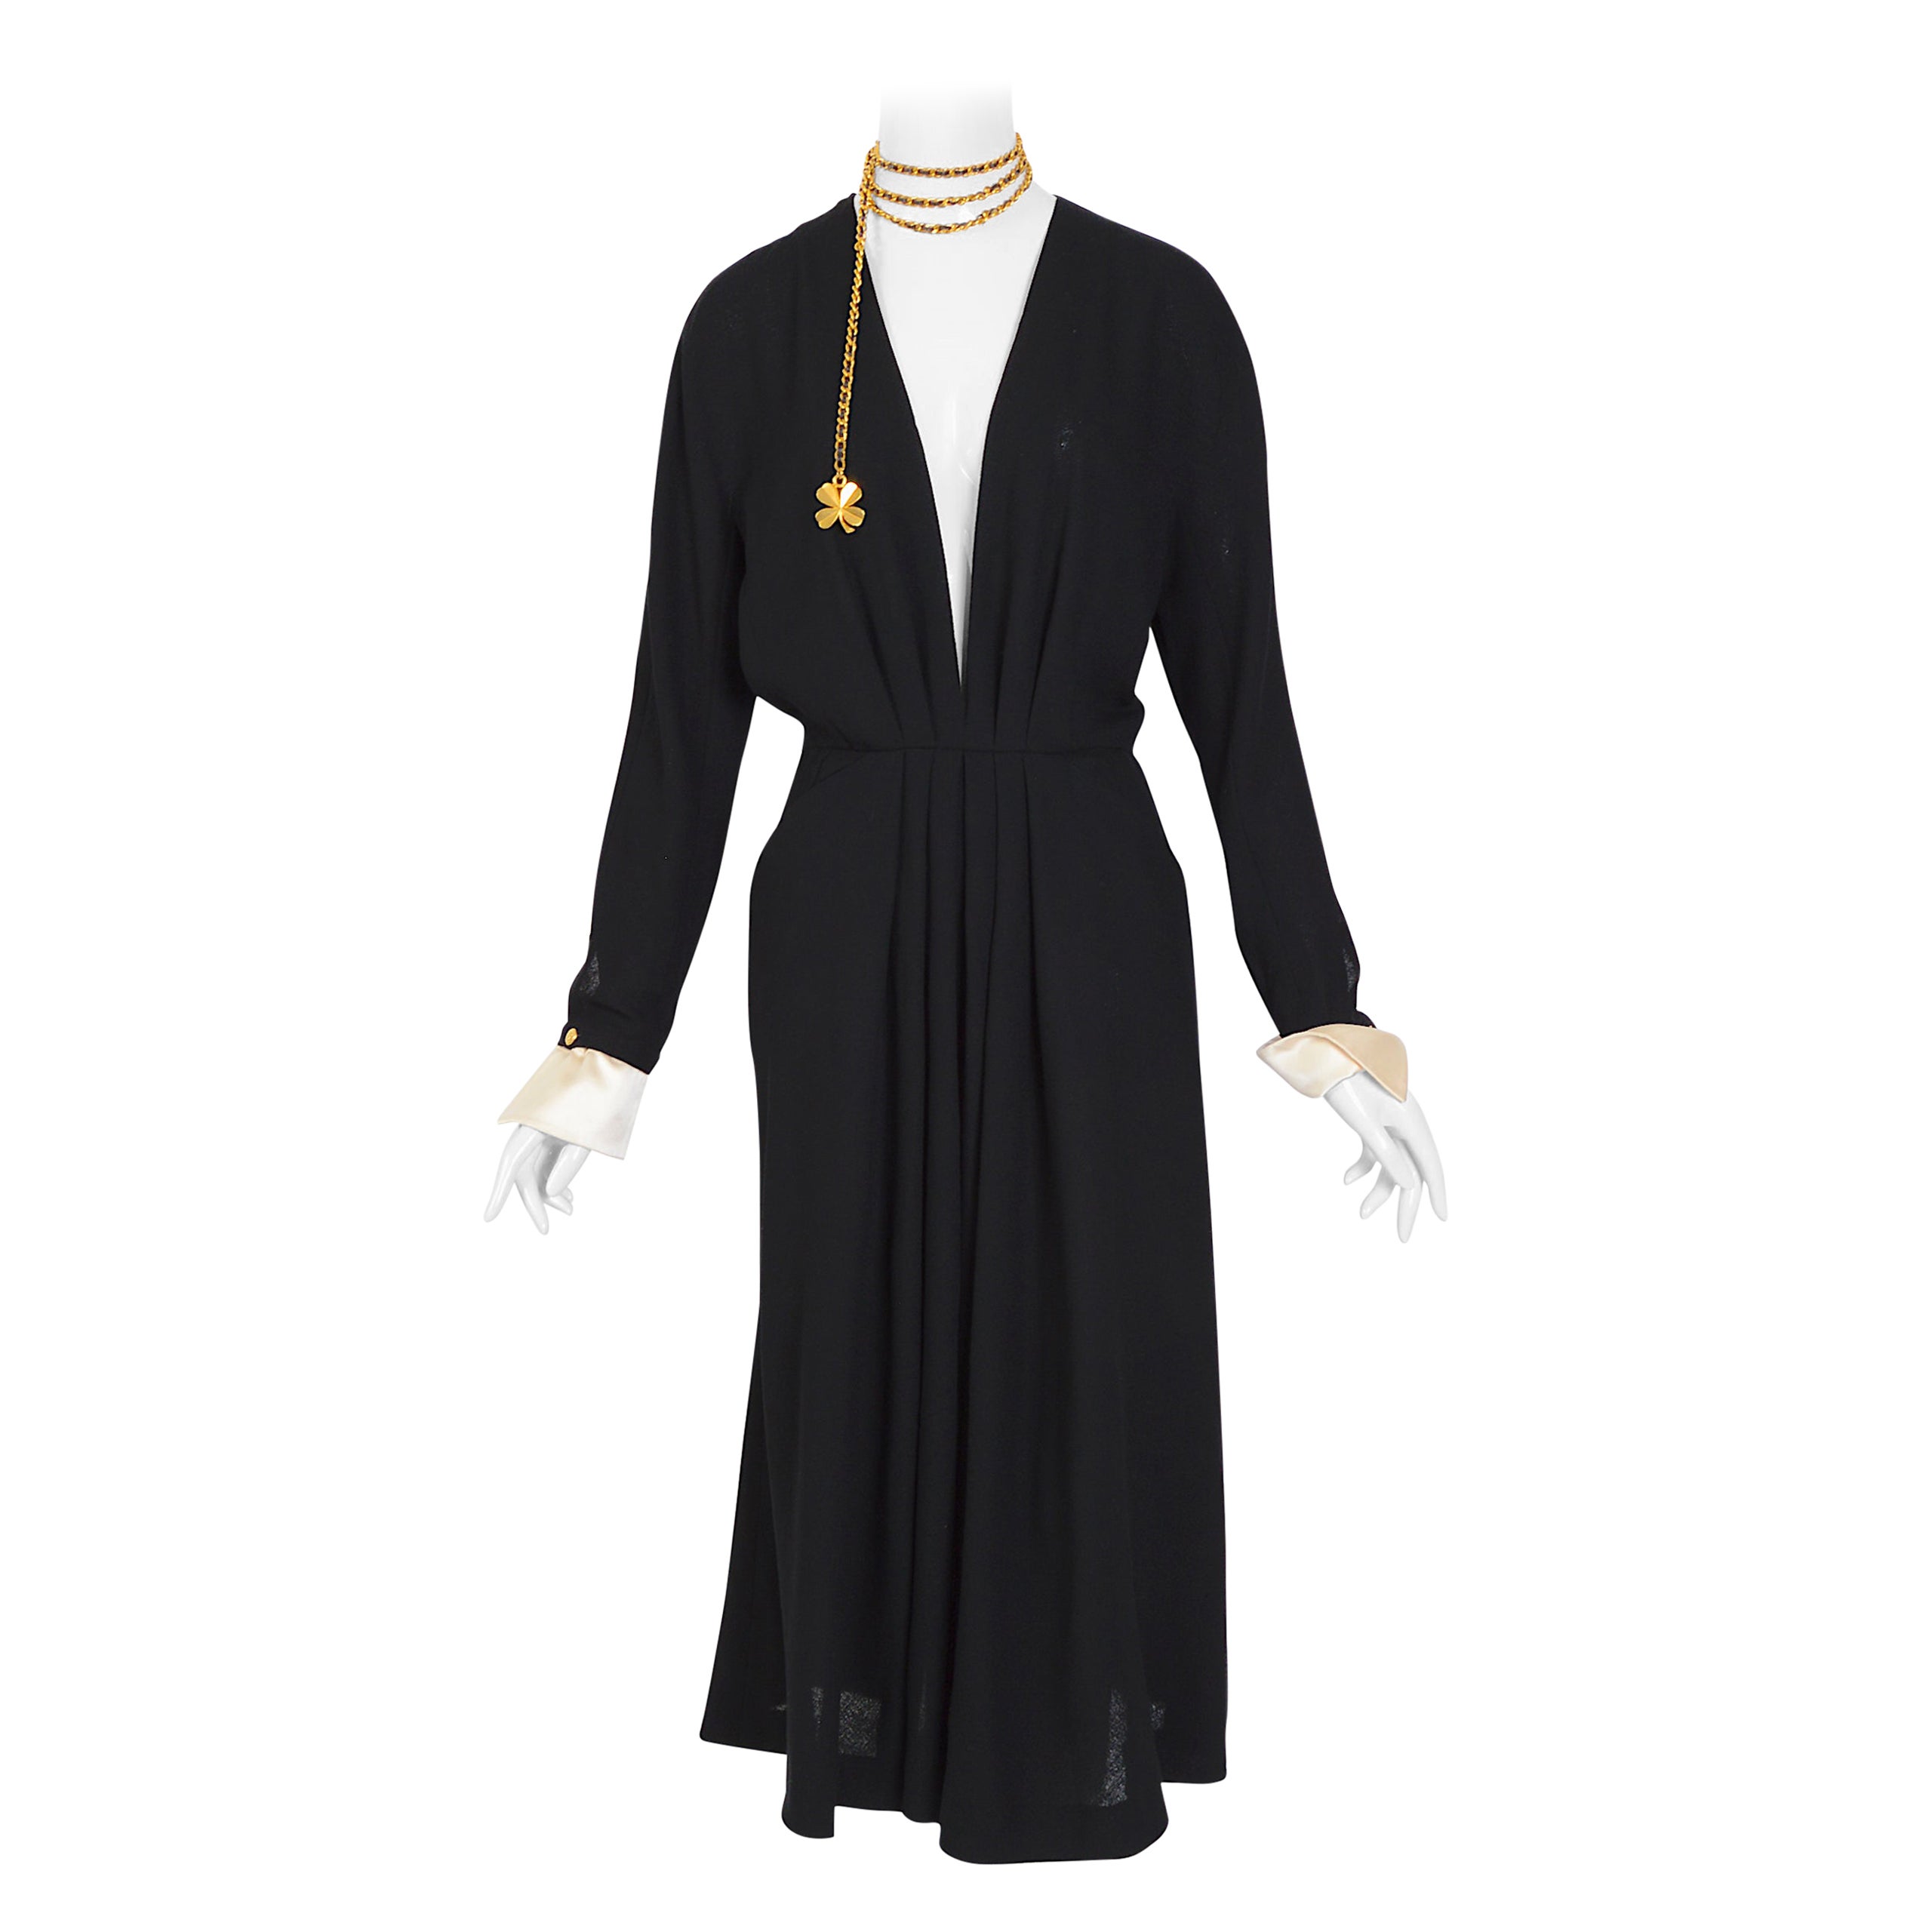 Chanel 1980s black deep v neck pleated crepe dress detachable white satin cuffs  For Sale